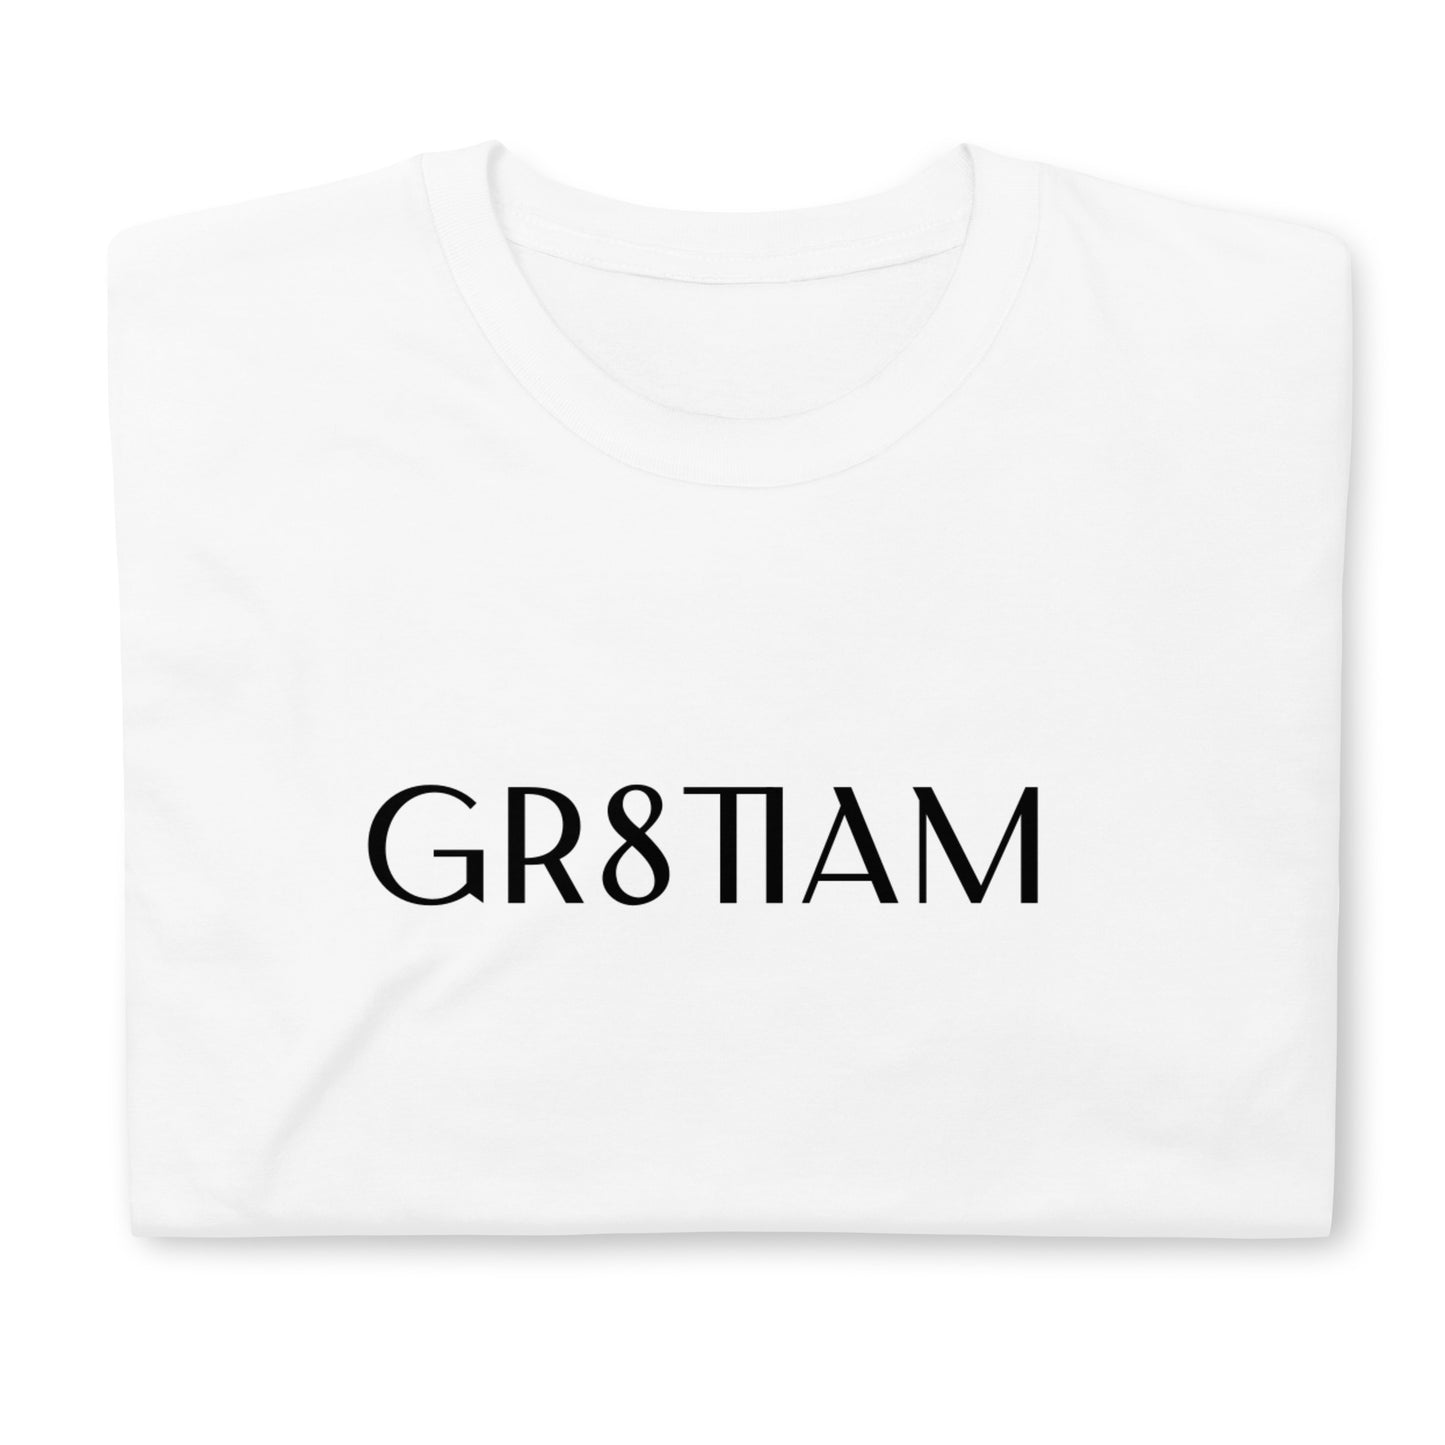 Short-Sleeve Unisex GR8TIAM T-Shirt